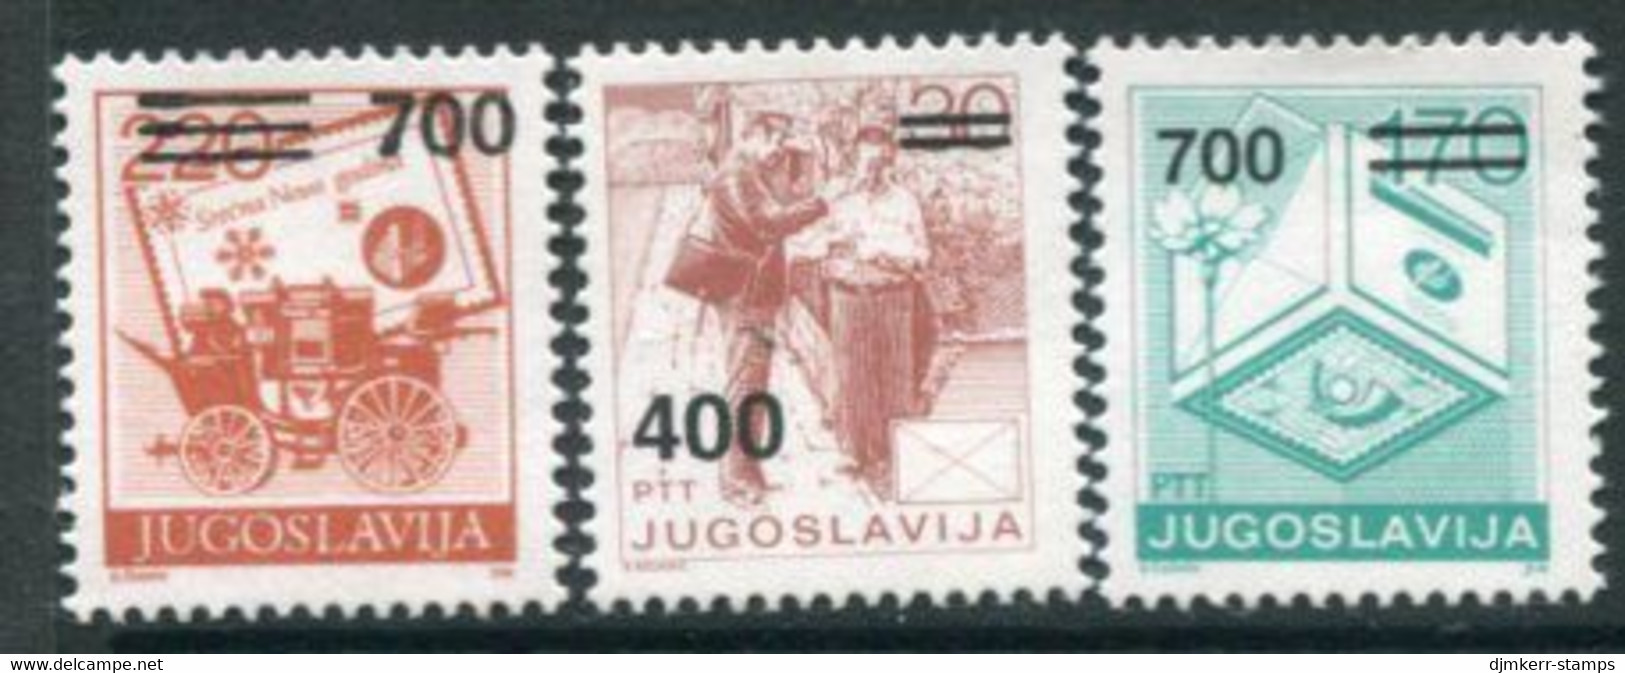 YUGOSLAVIA 1989 Surcharges 400 D, 700 D. (2) MNH / **.  Michel 2359, 2363-64 - Ongebruikt